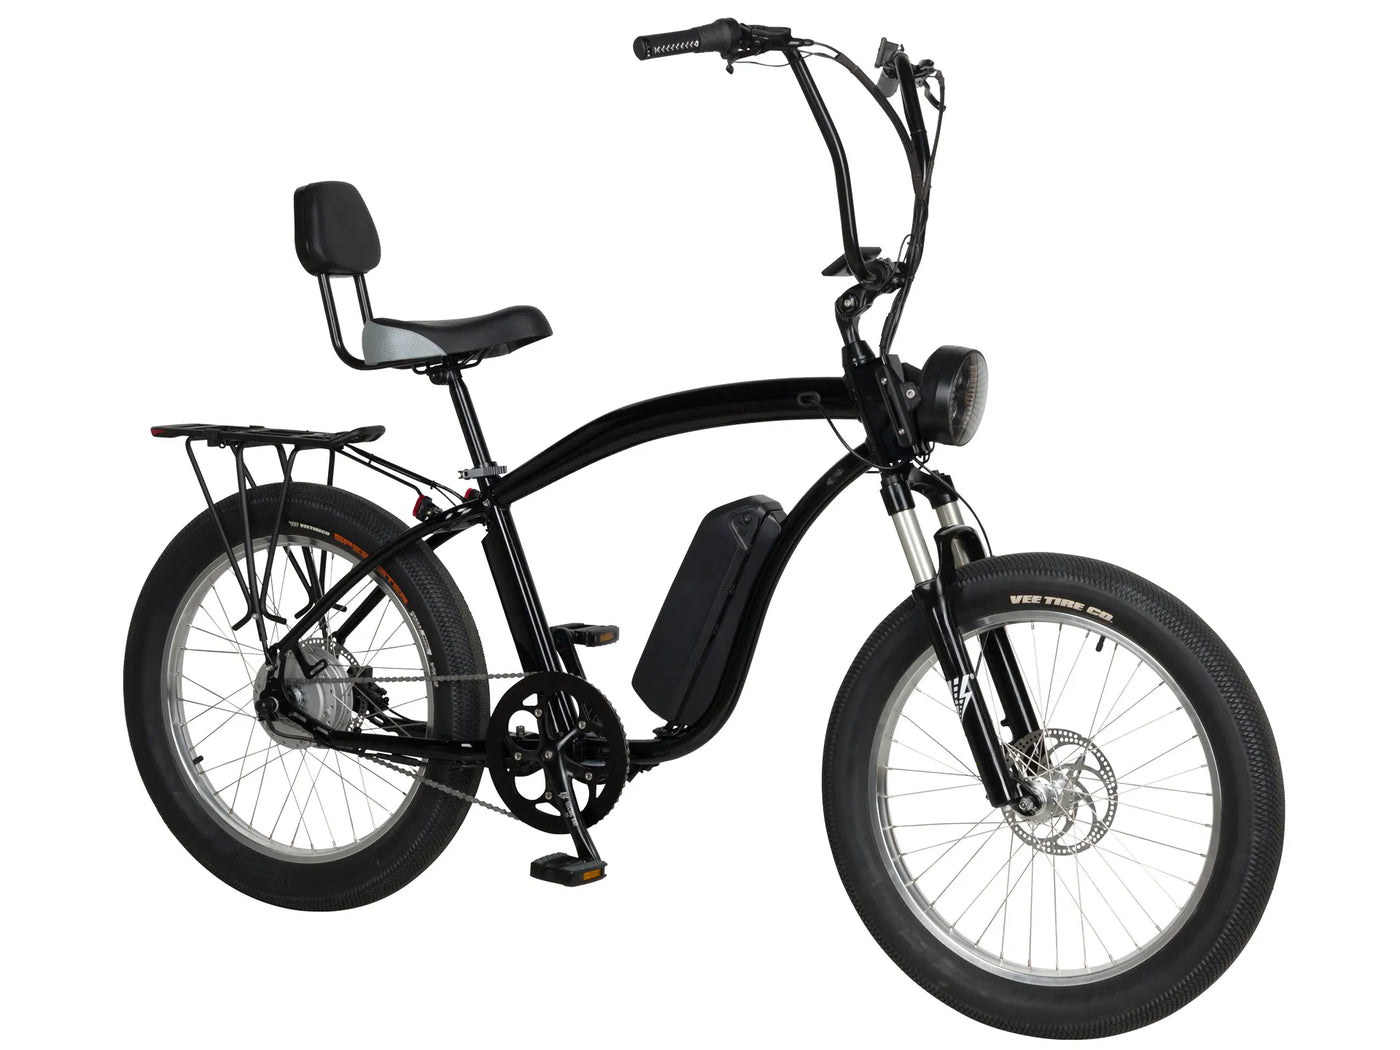 Electric Bike Company Model A E-bike Ideal For Low-Key E-Cruising Around Town